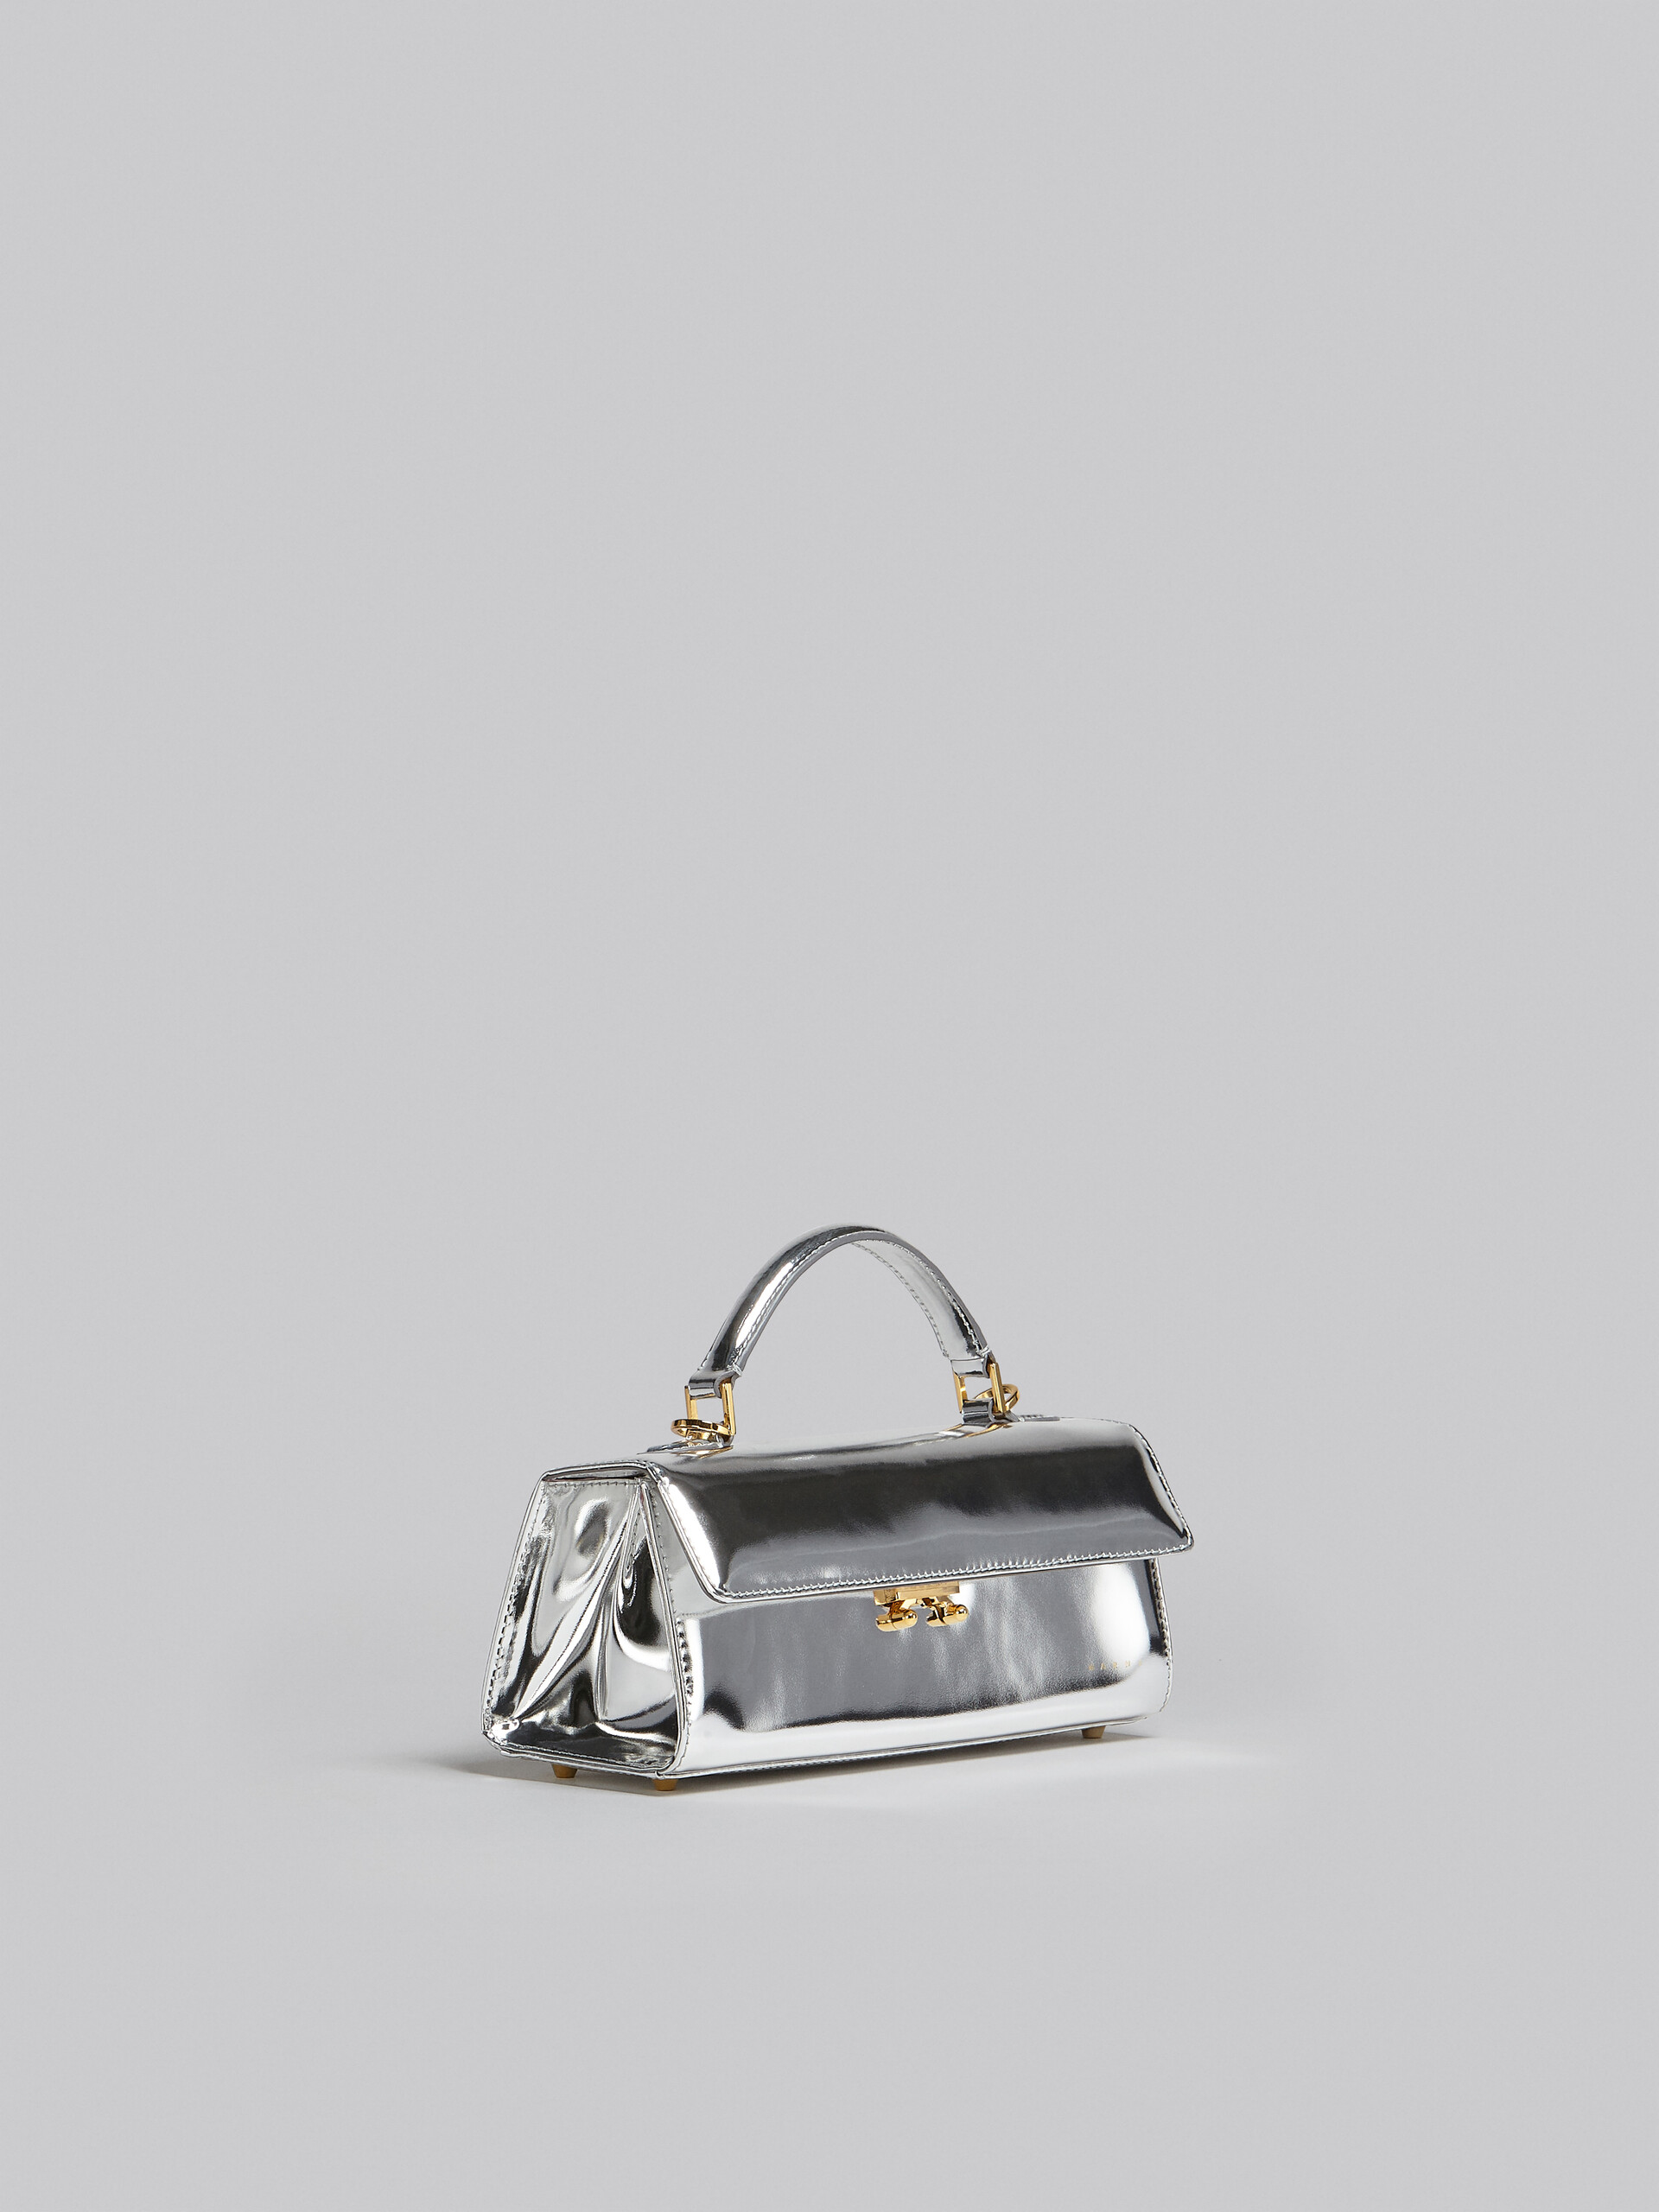 Relativity Medium Bag in silver-tone leather - Handbag - Image 5